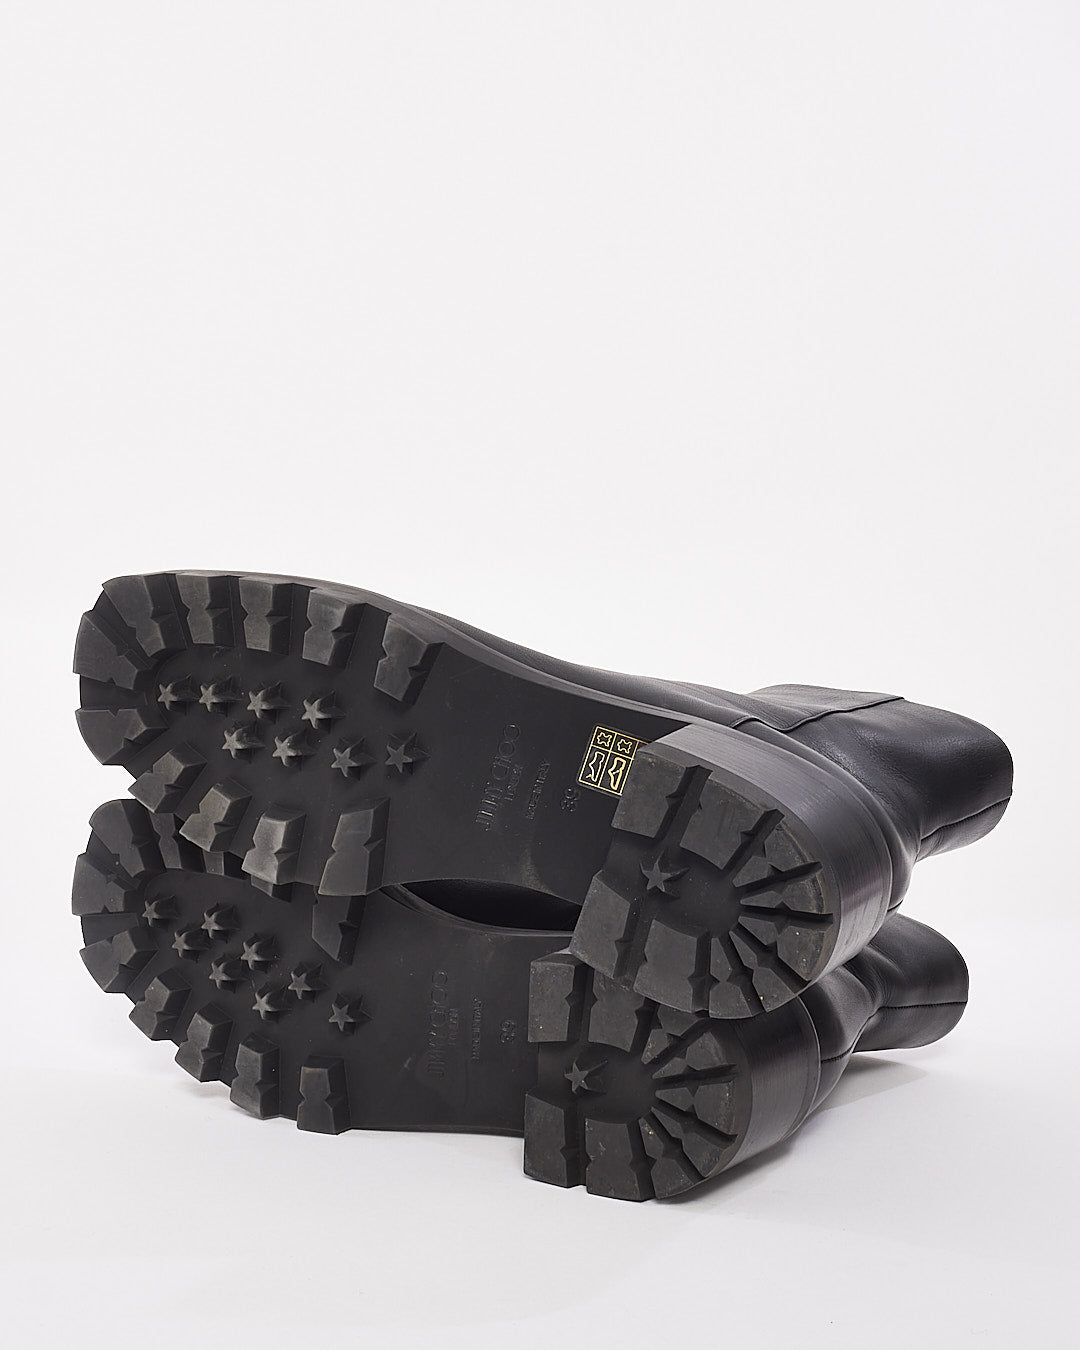 Jimmy Choo Bottes en cuir noir avec bordure en strass - 39